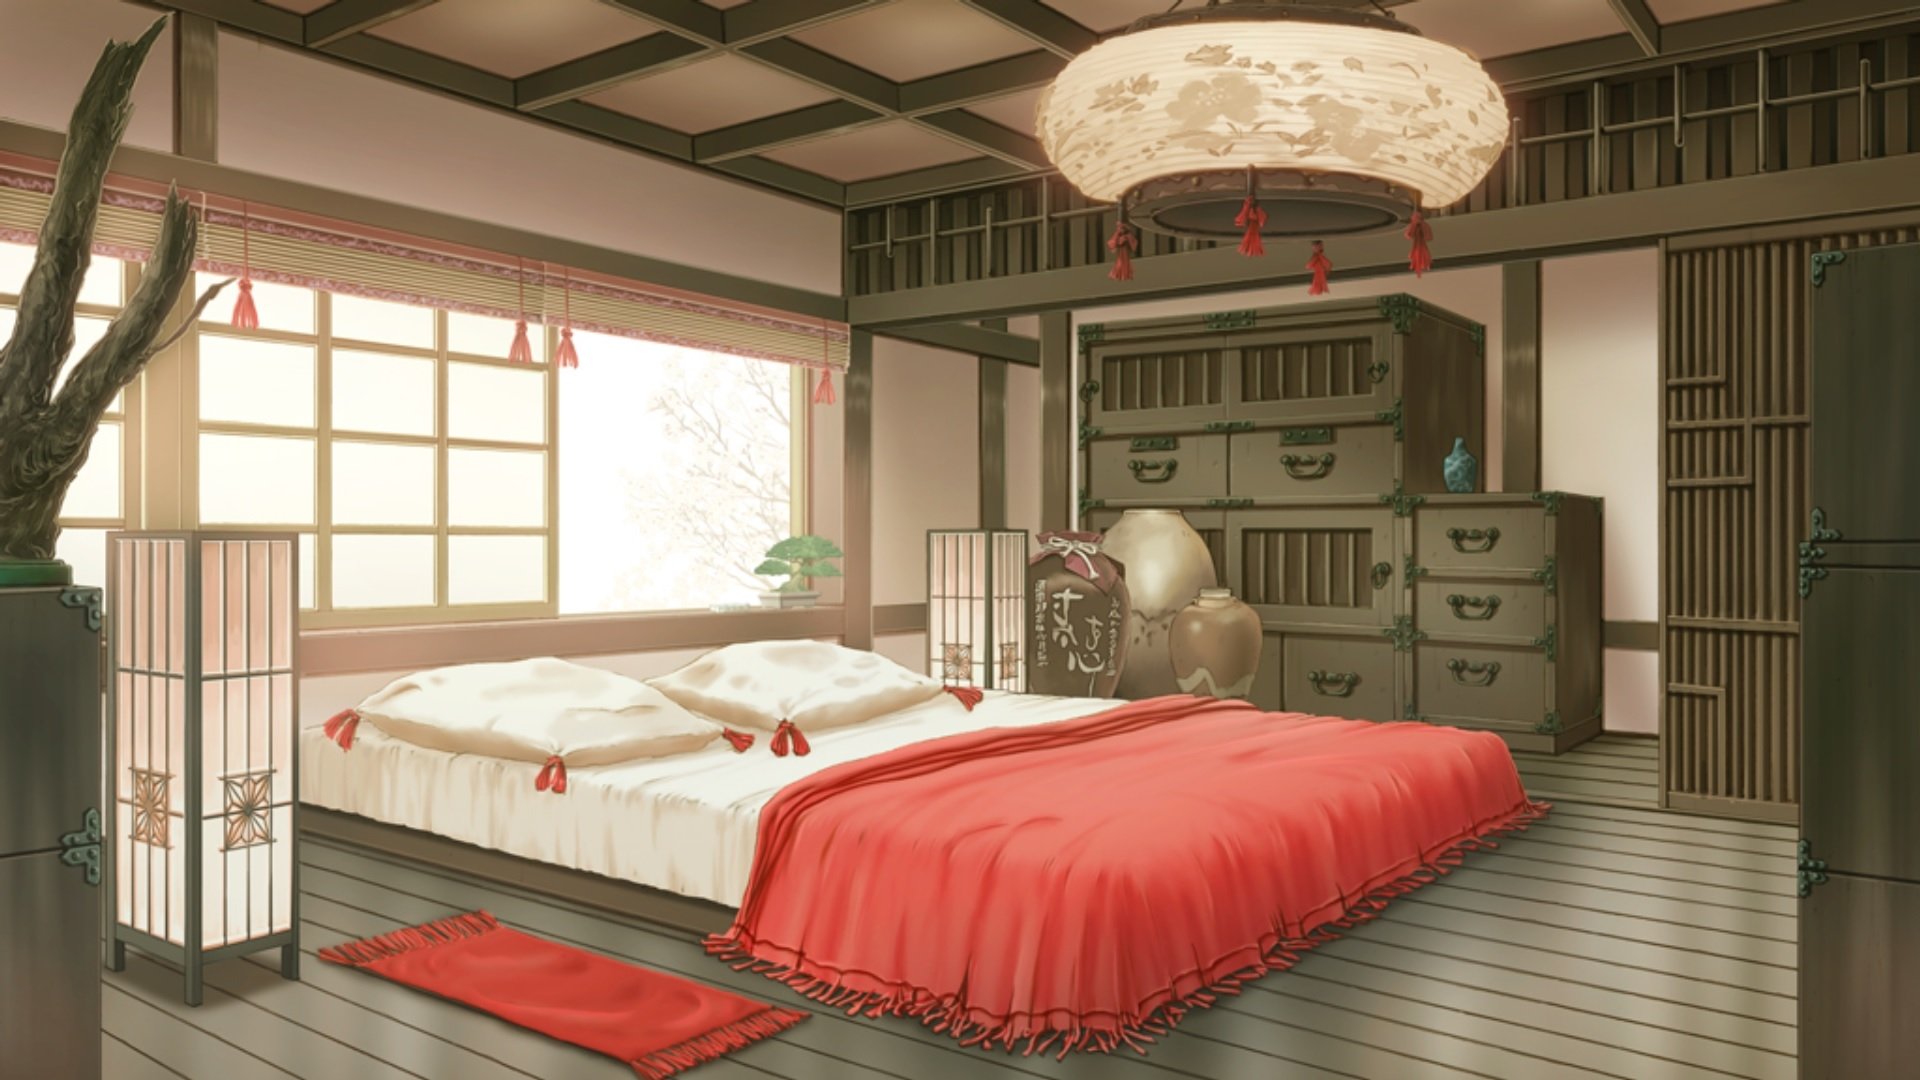 anime room wallpaper,bedroom,bed,furniture,room,interior design